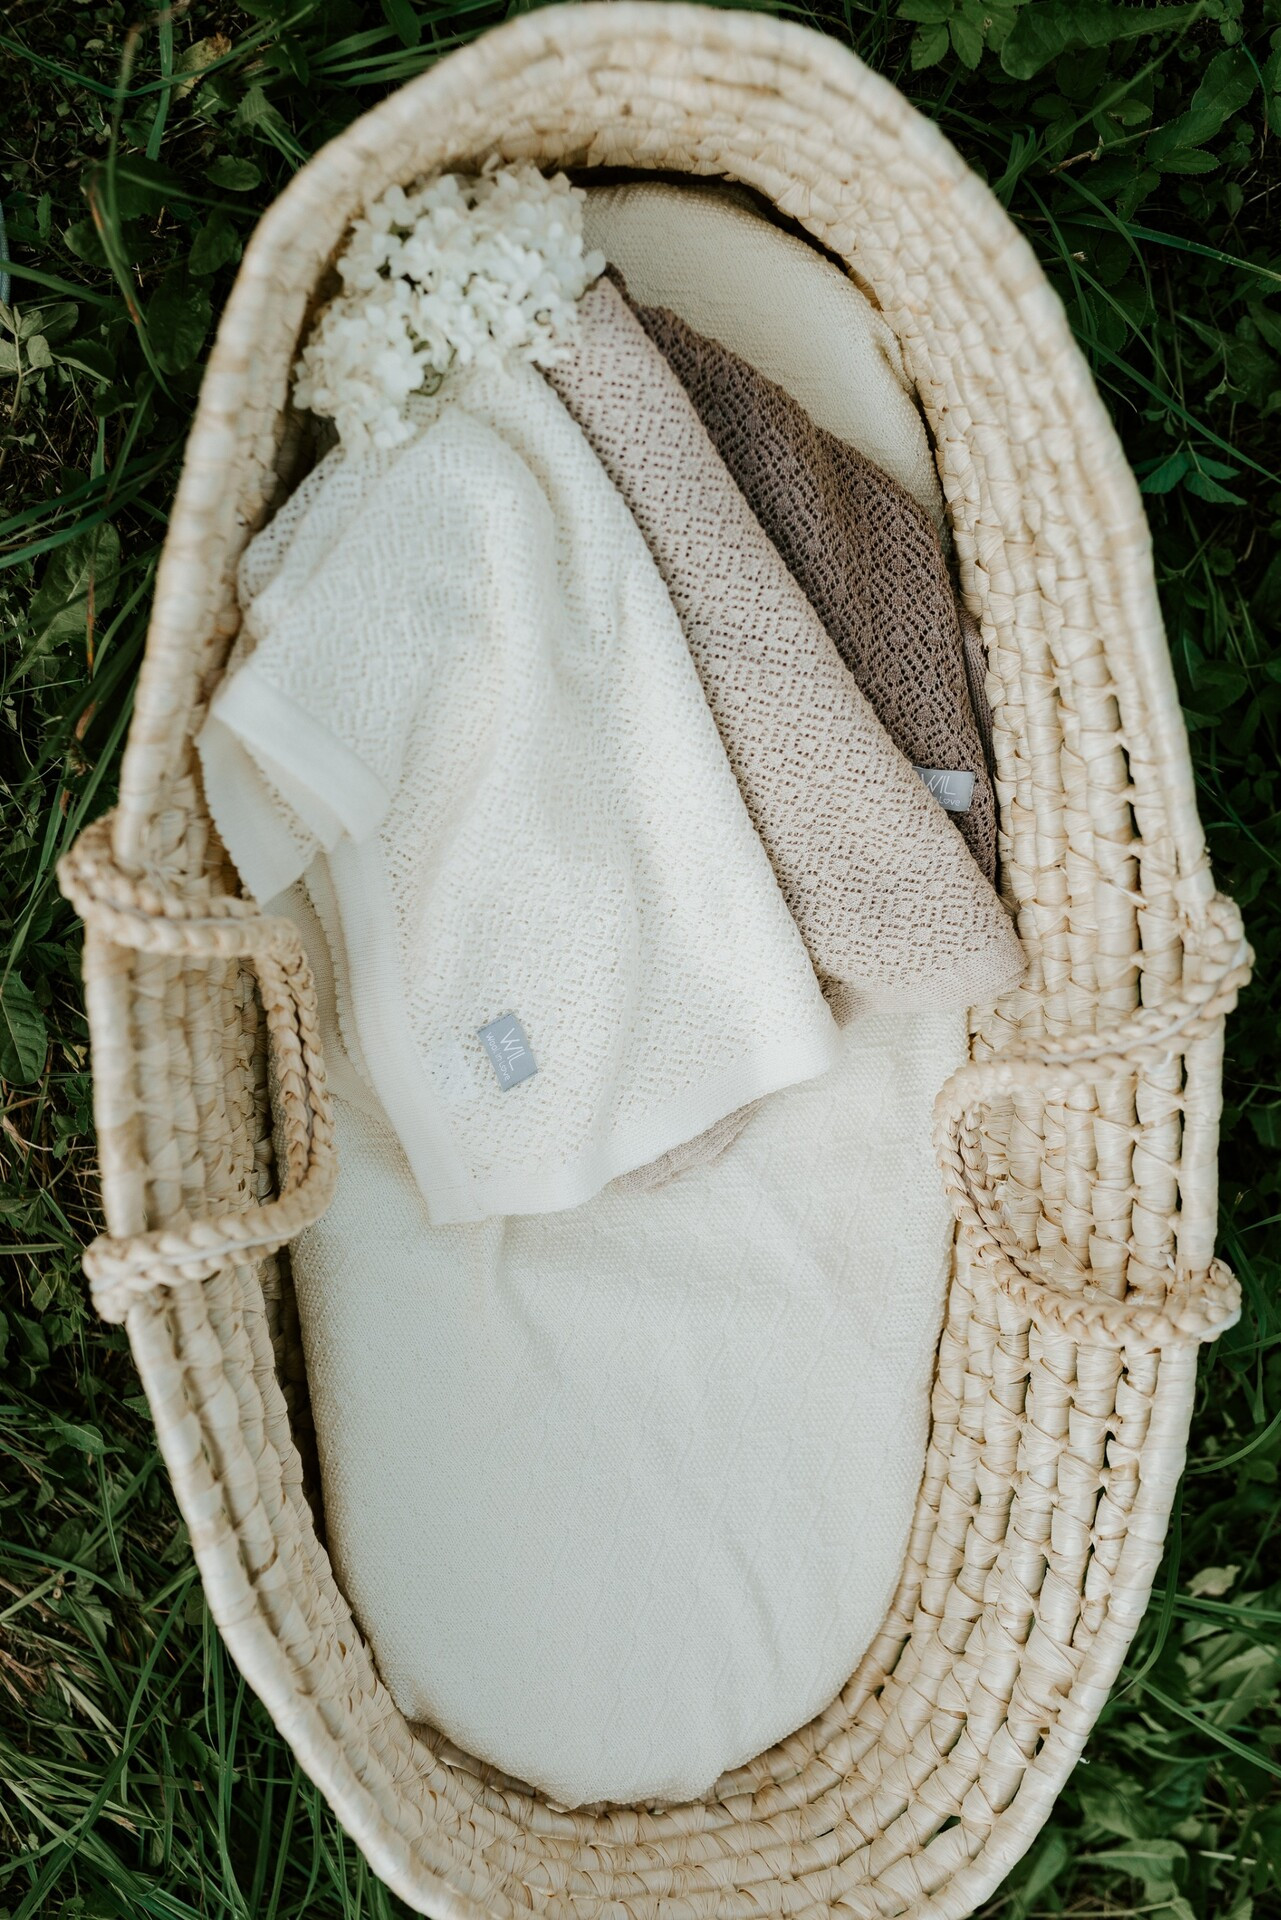 Merino wool knitted baby blanket and bonnet gift set for newborns. 